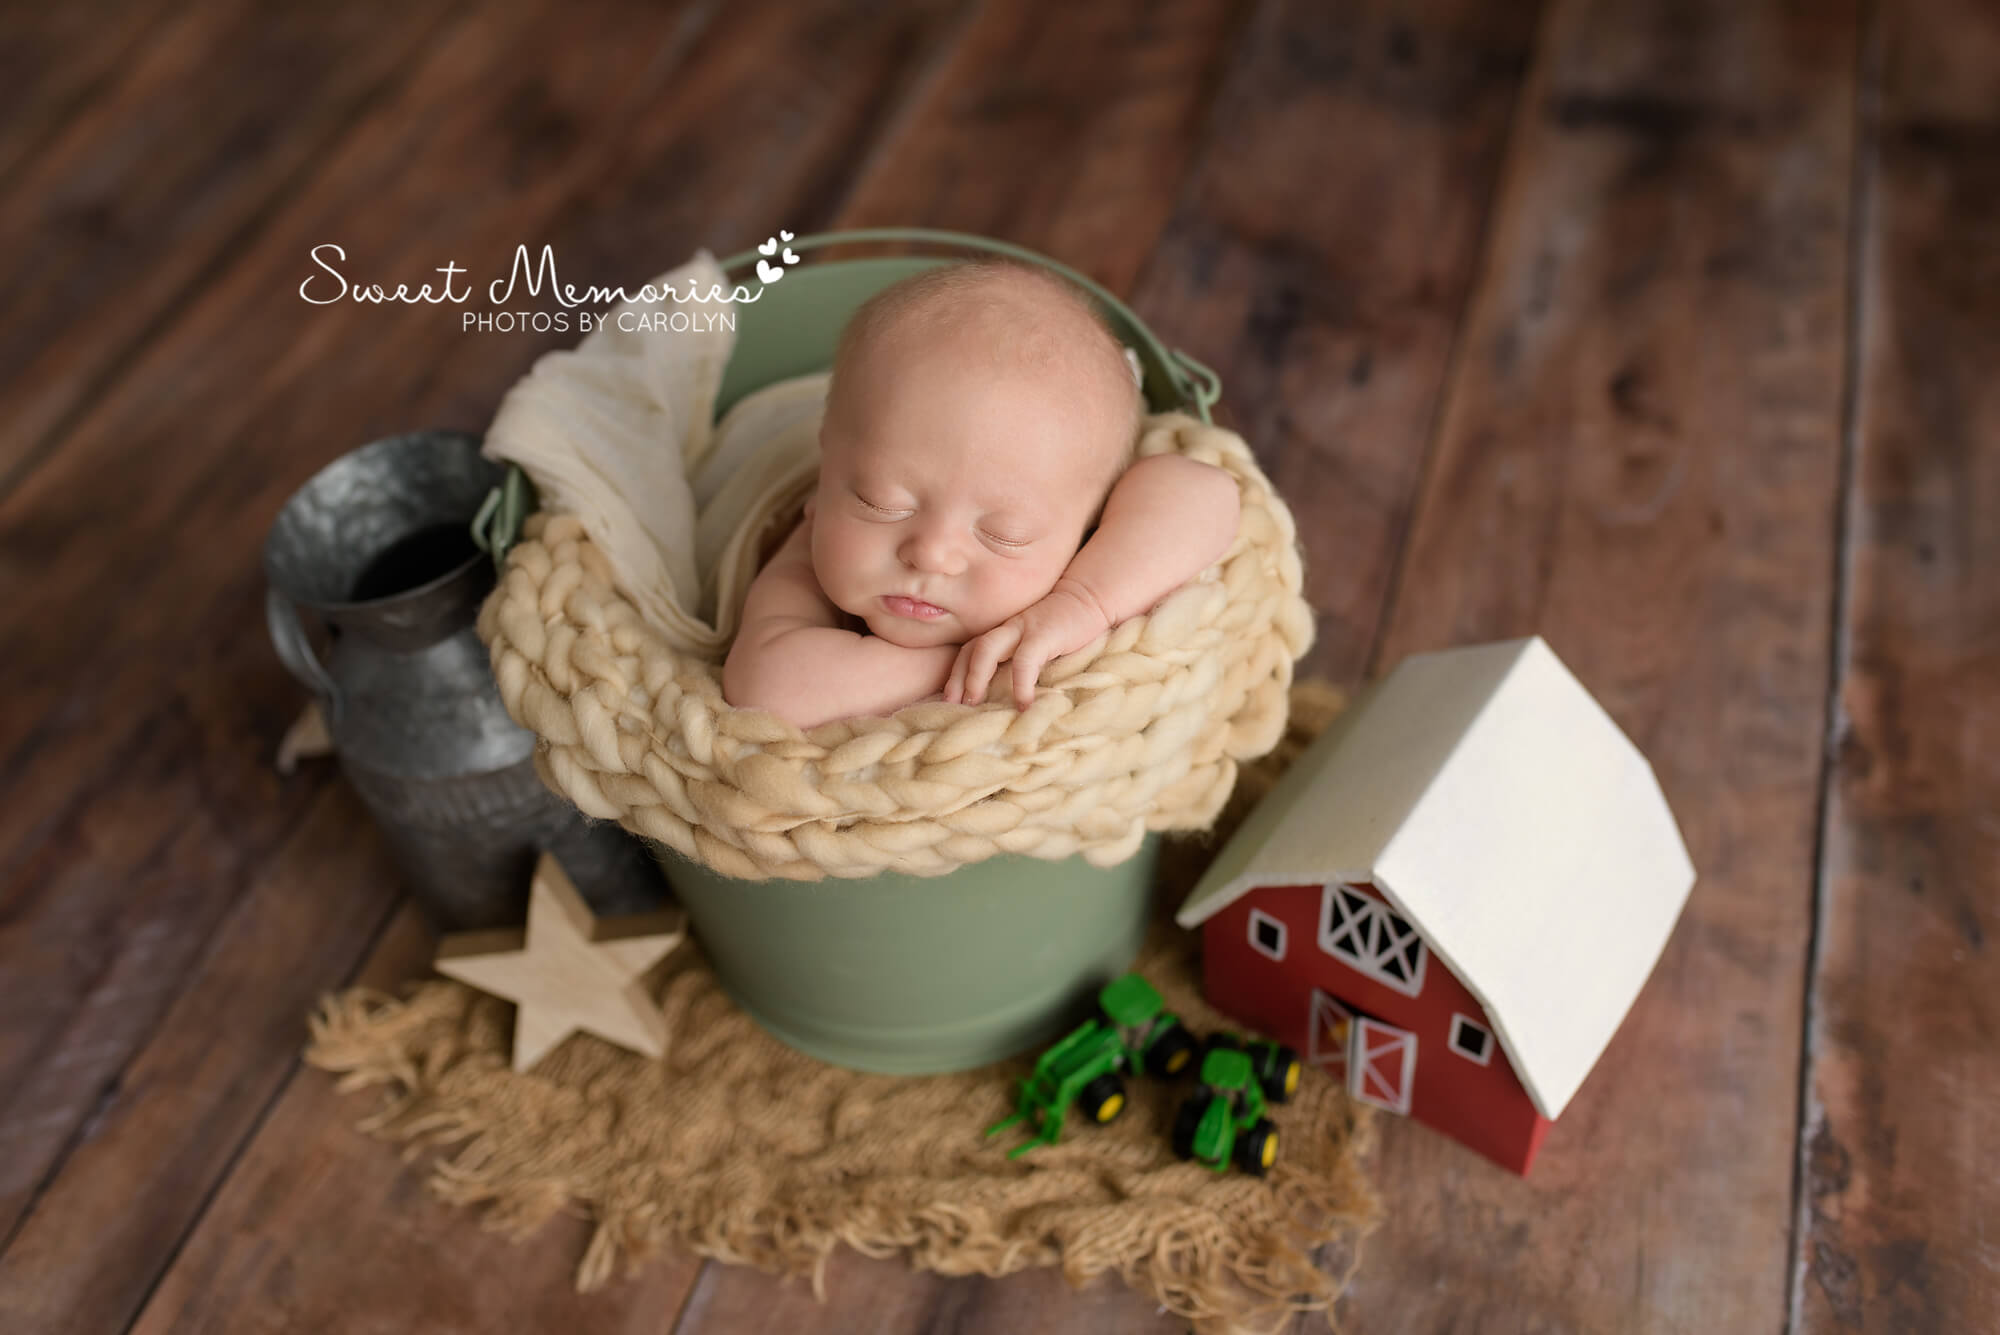 newborn baby boy in bucket pose with farmer props | Warrington, PA newborn photographer | Sweet Memories Photos by Carolyn, Quakertown Pennsylvania